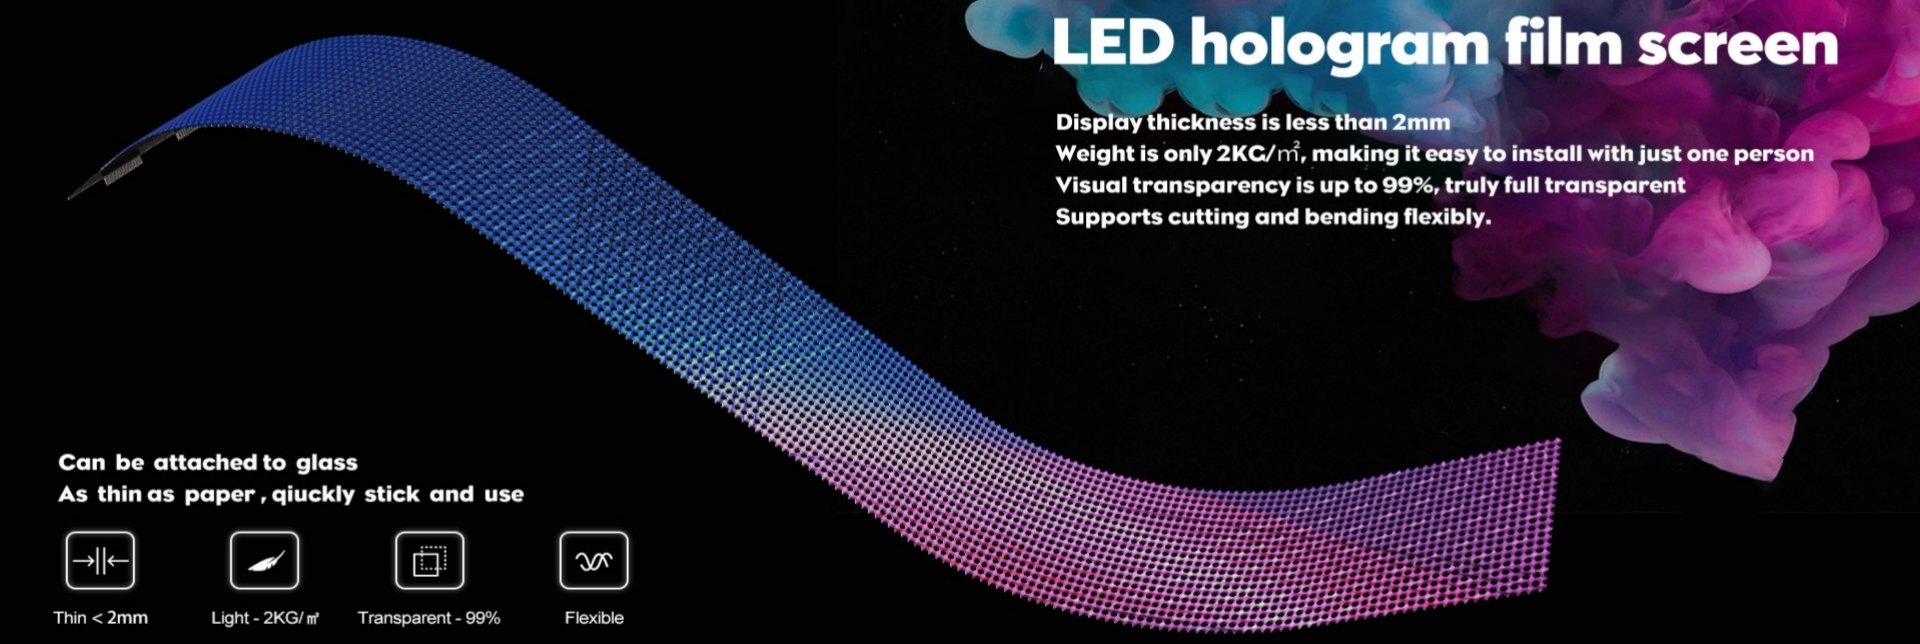 Transparent LED-videobanner